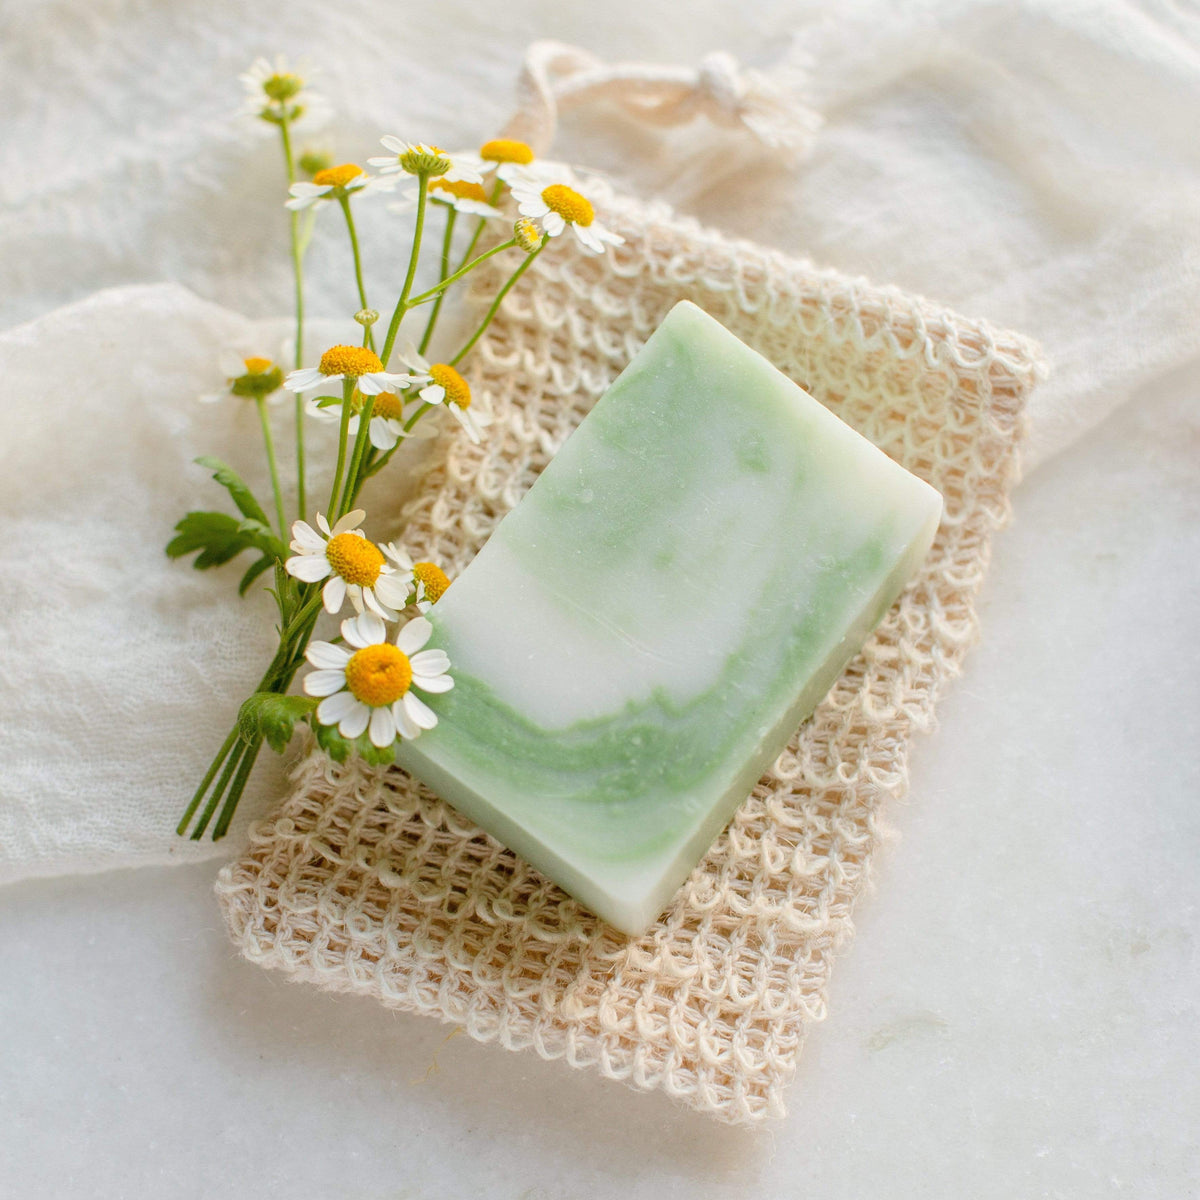 Organic LAVENDER Bar Soap for Face & Body 4oz Bars – Junk Free Beauty